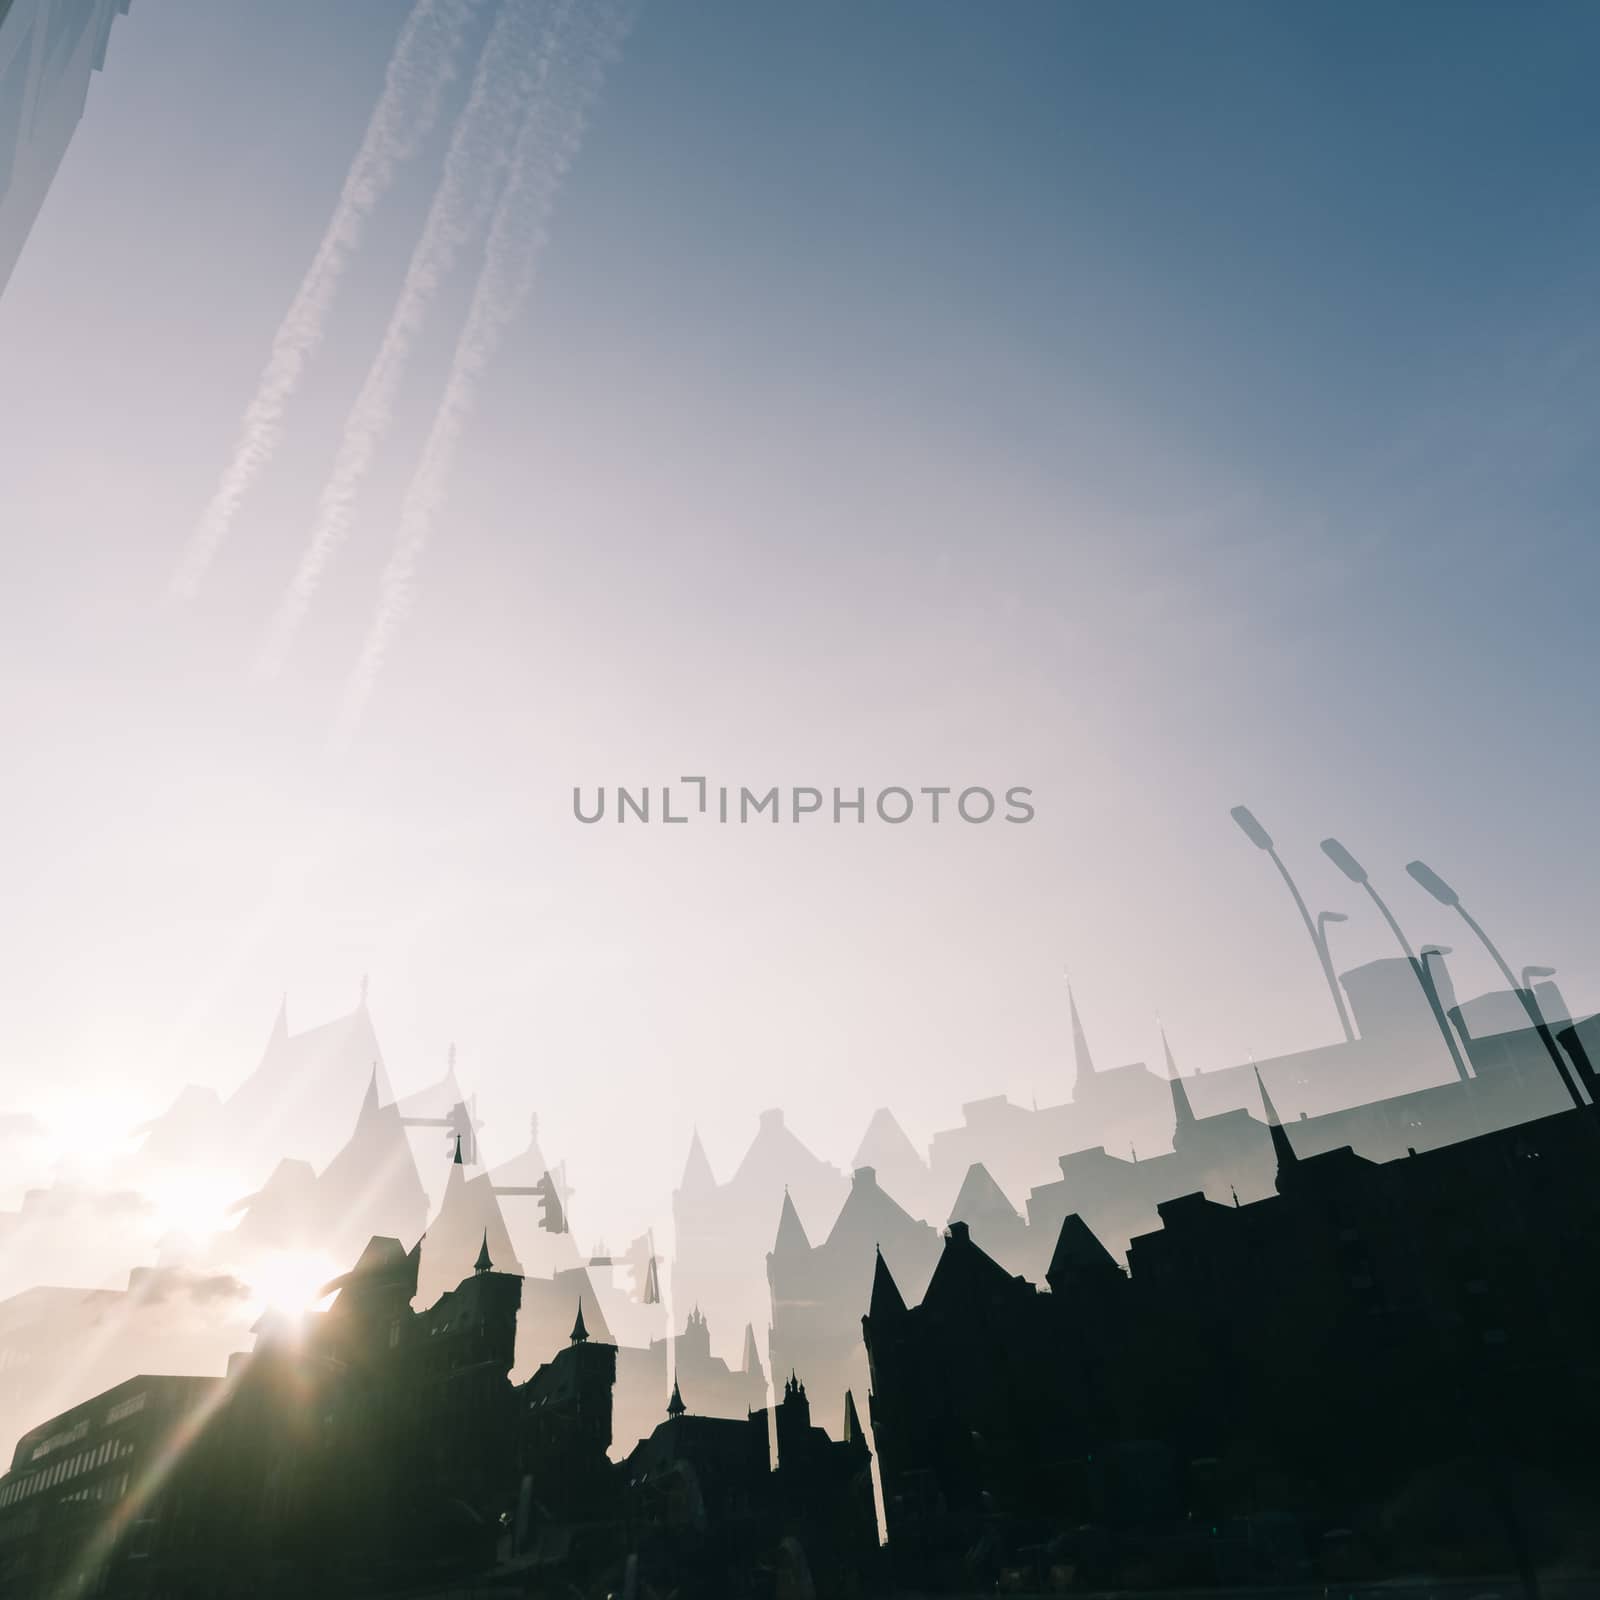 Double exposure photograph of a city skyline